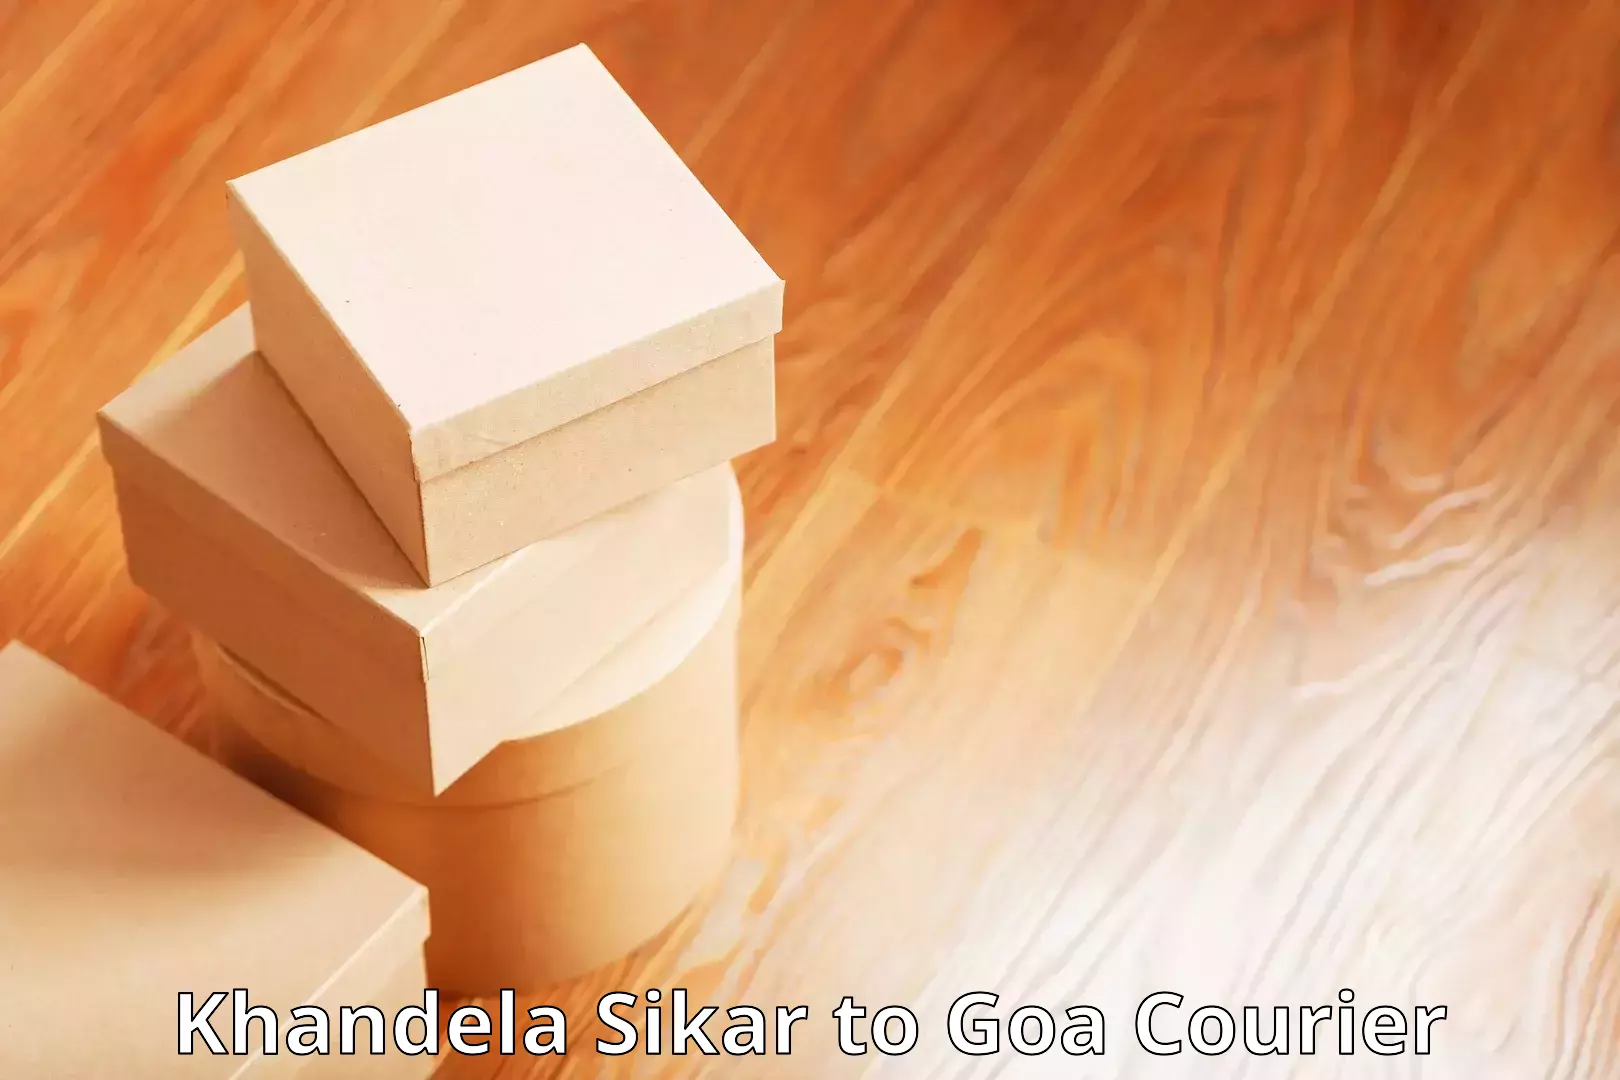 Express mail solutions Khandela Sikar to Goa